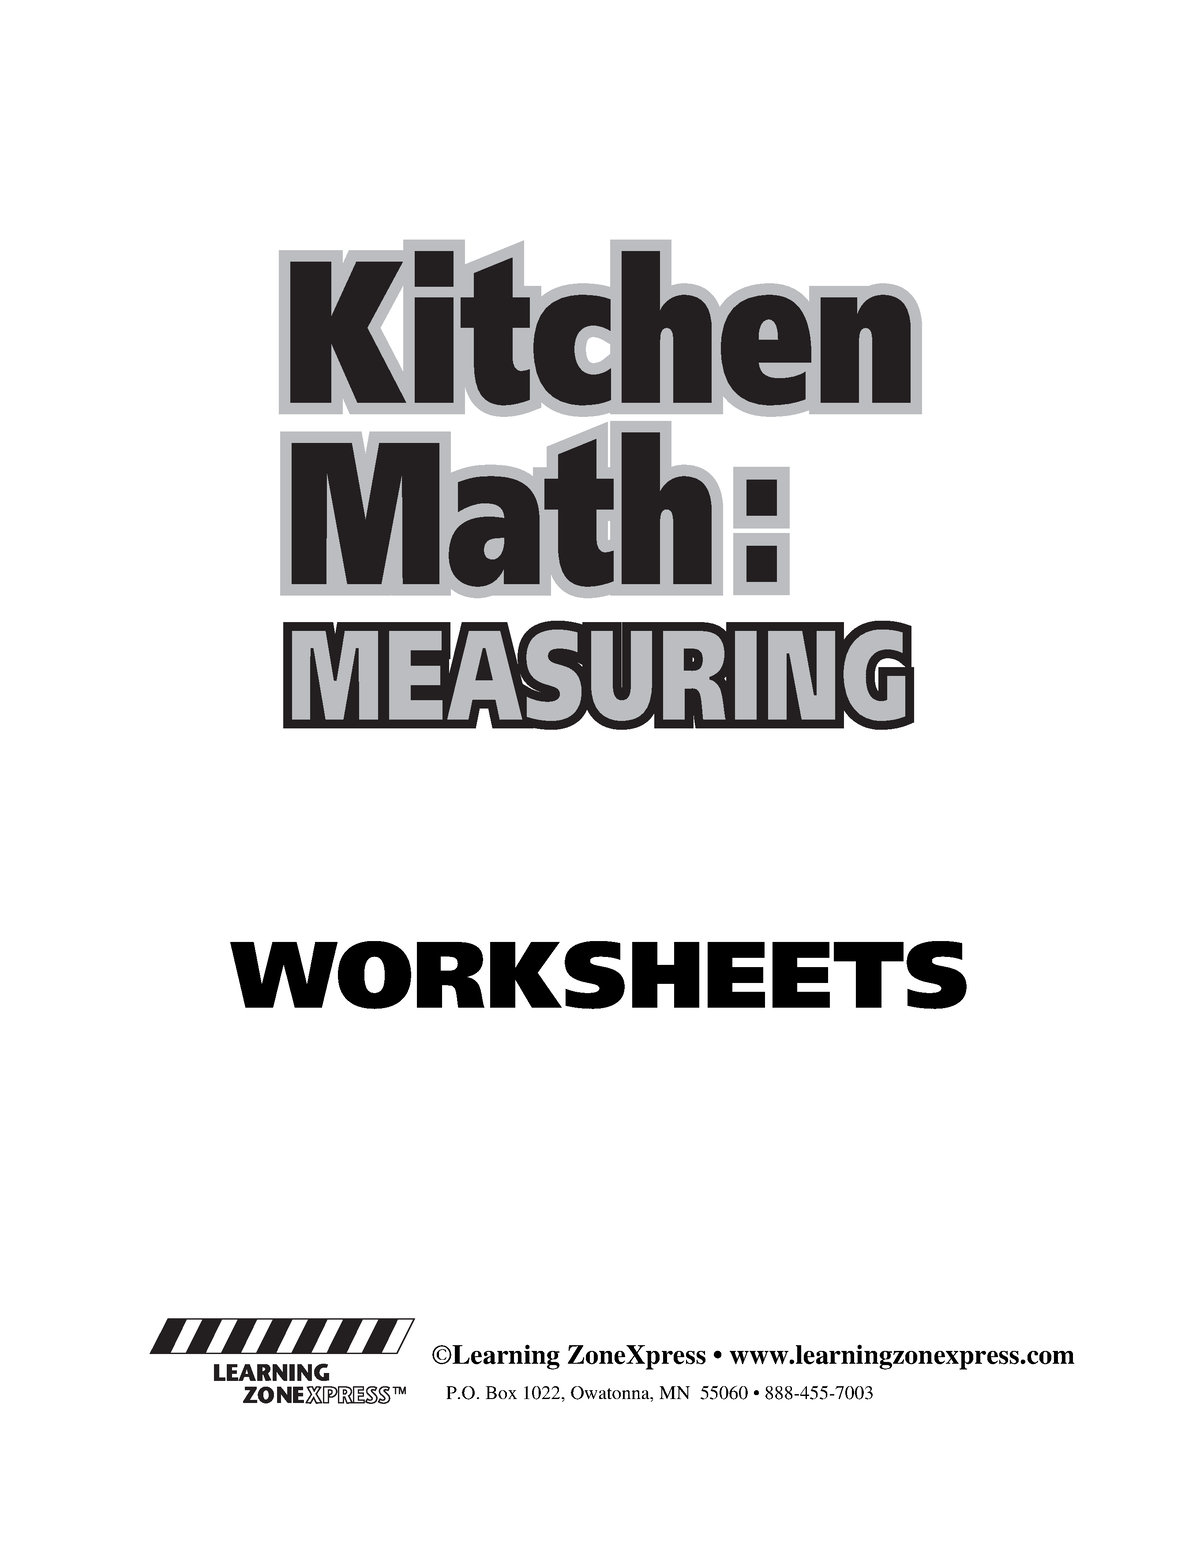 kitchen-math-worksheets-worksheets-learning-zonexpress